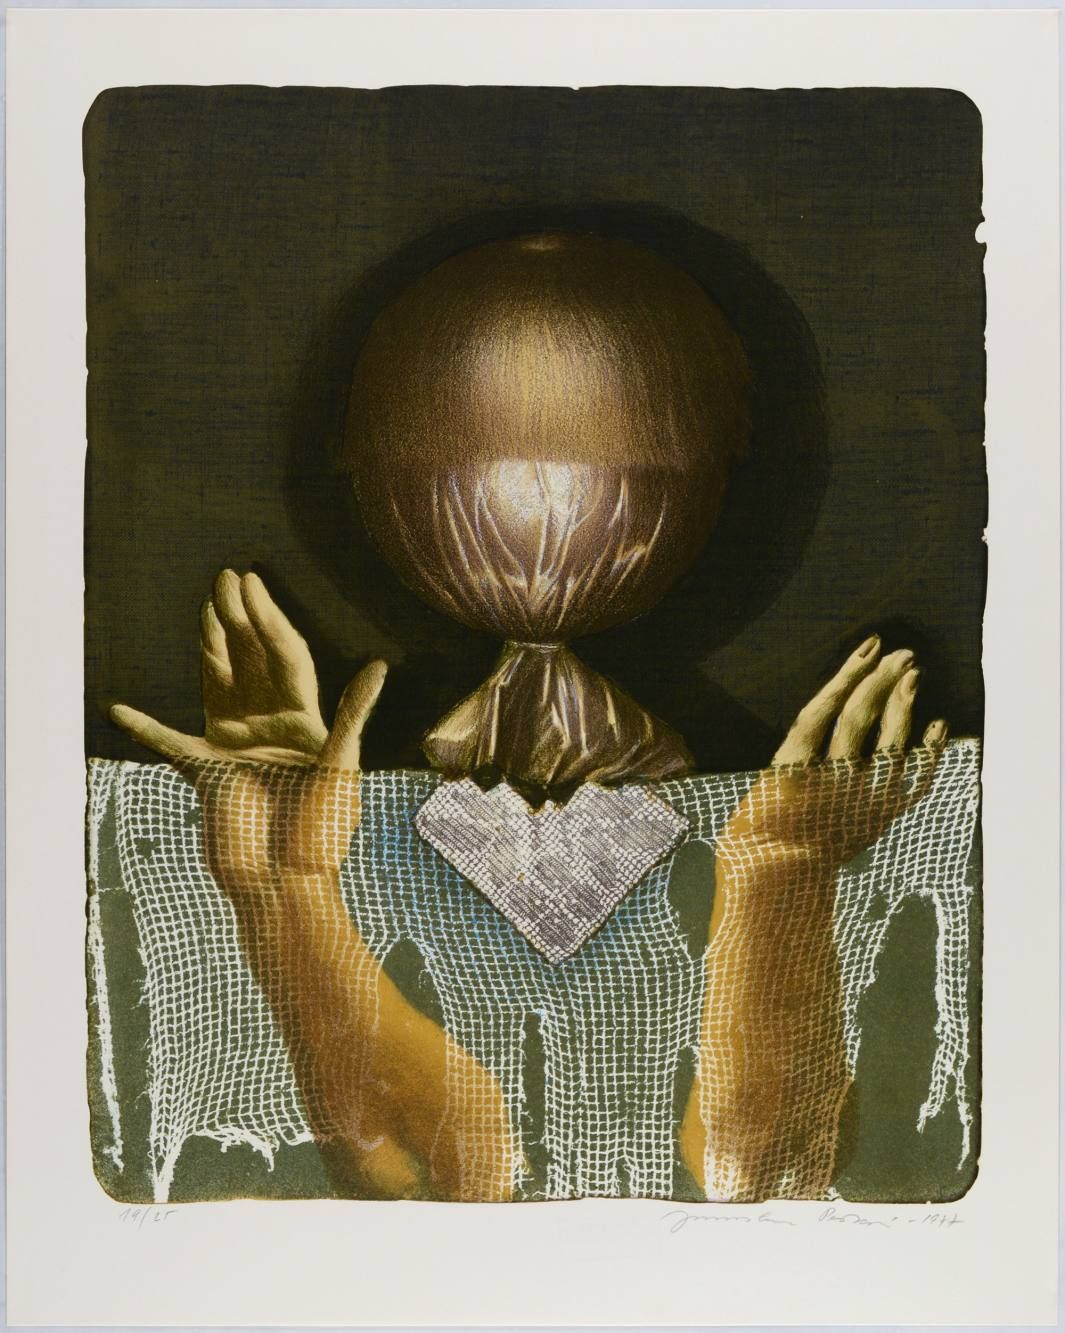 Jaroslava Pesicova (1935-2015) 无名氏

1977

纸上彩色石版画，63.1x50.9厘米，编号，在印刷品下用铅笔签名并注明日期&hellip;